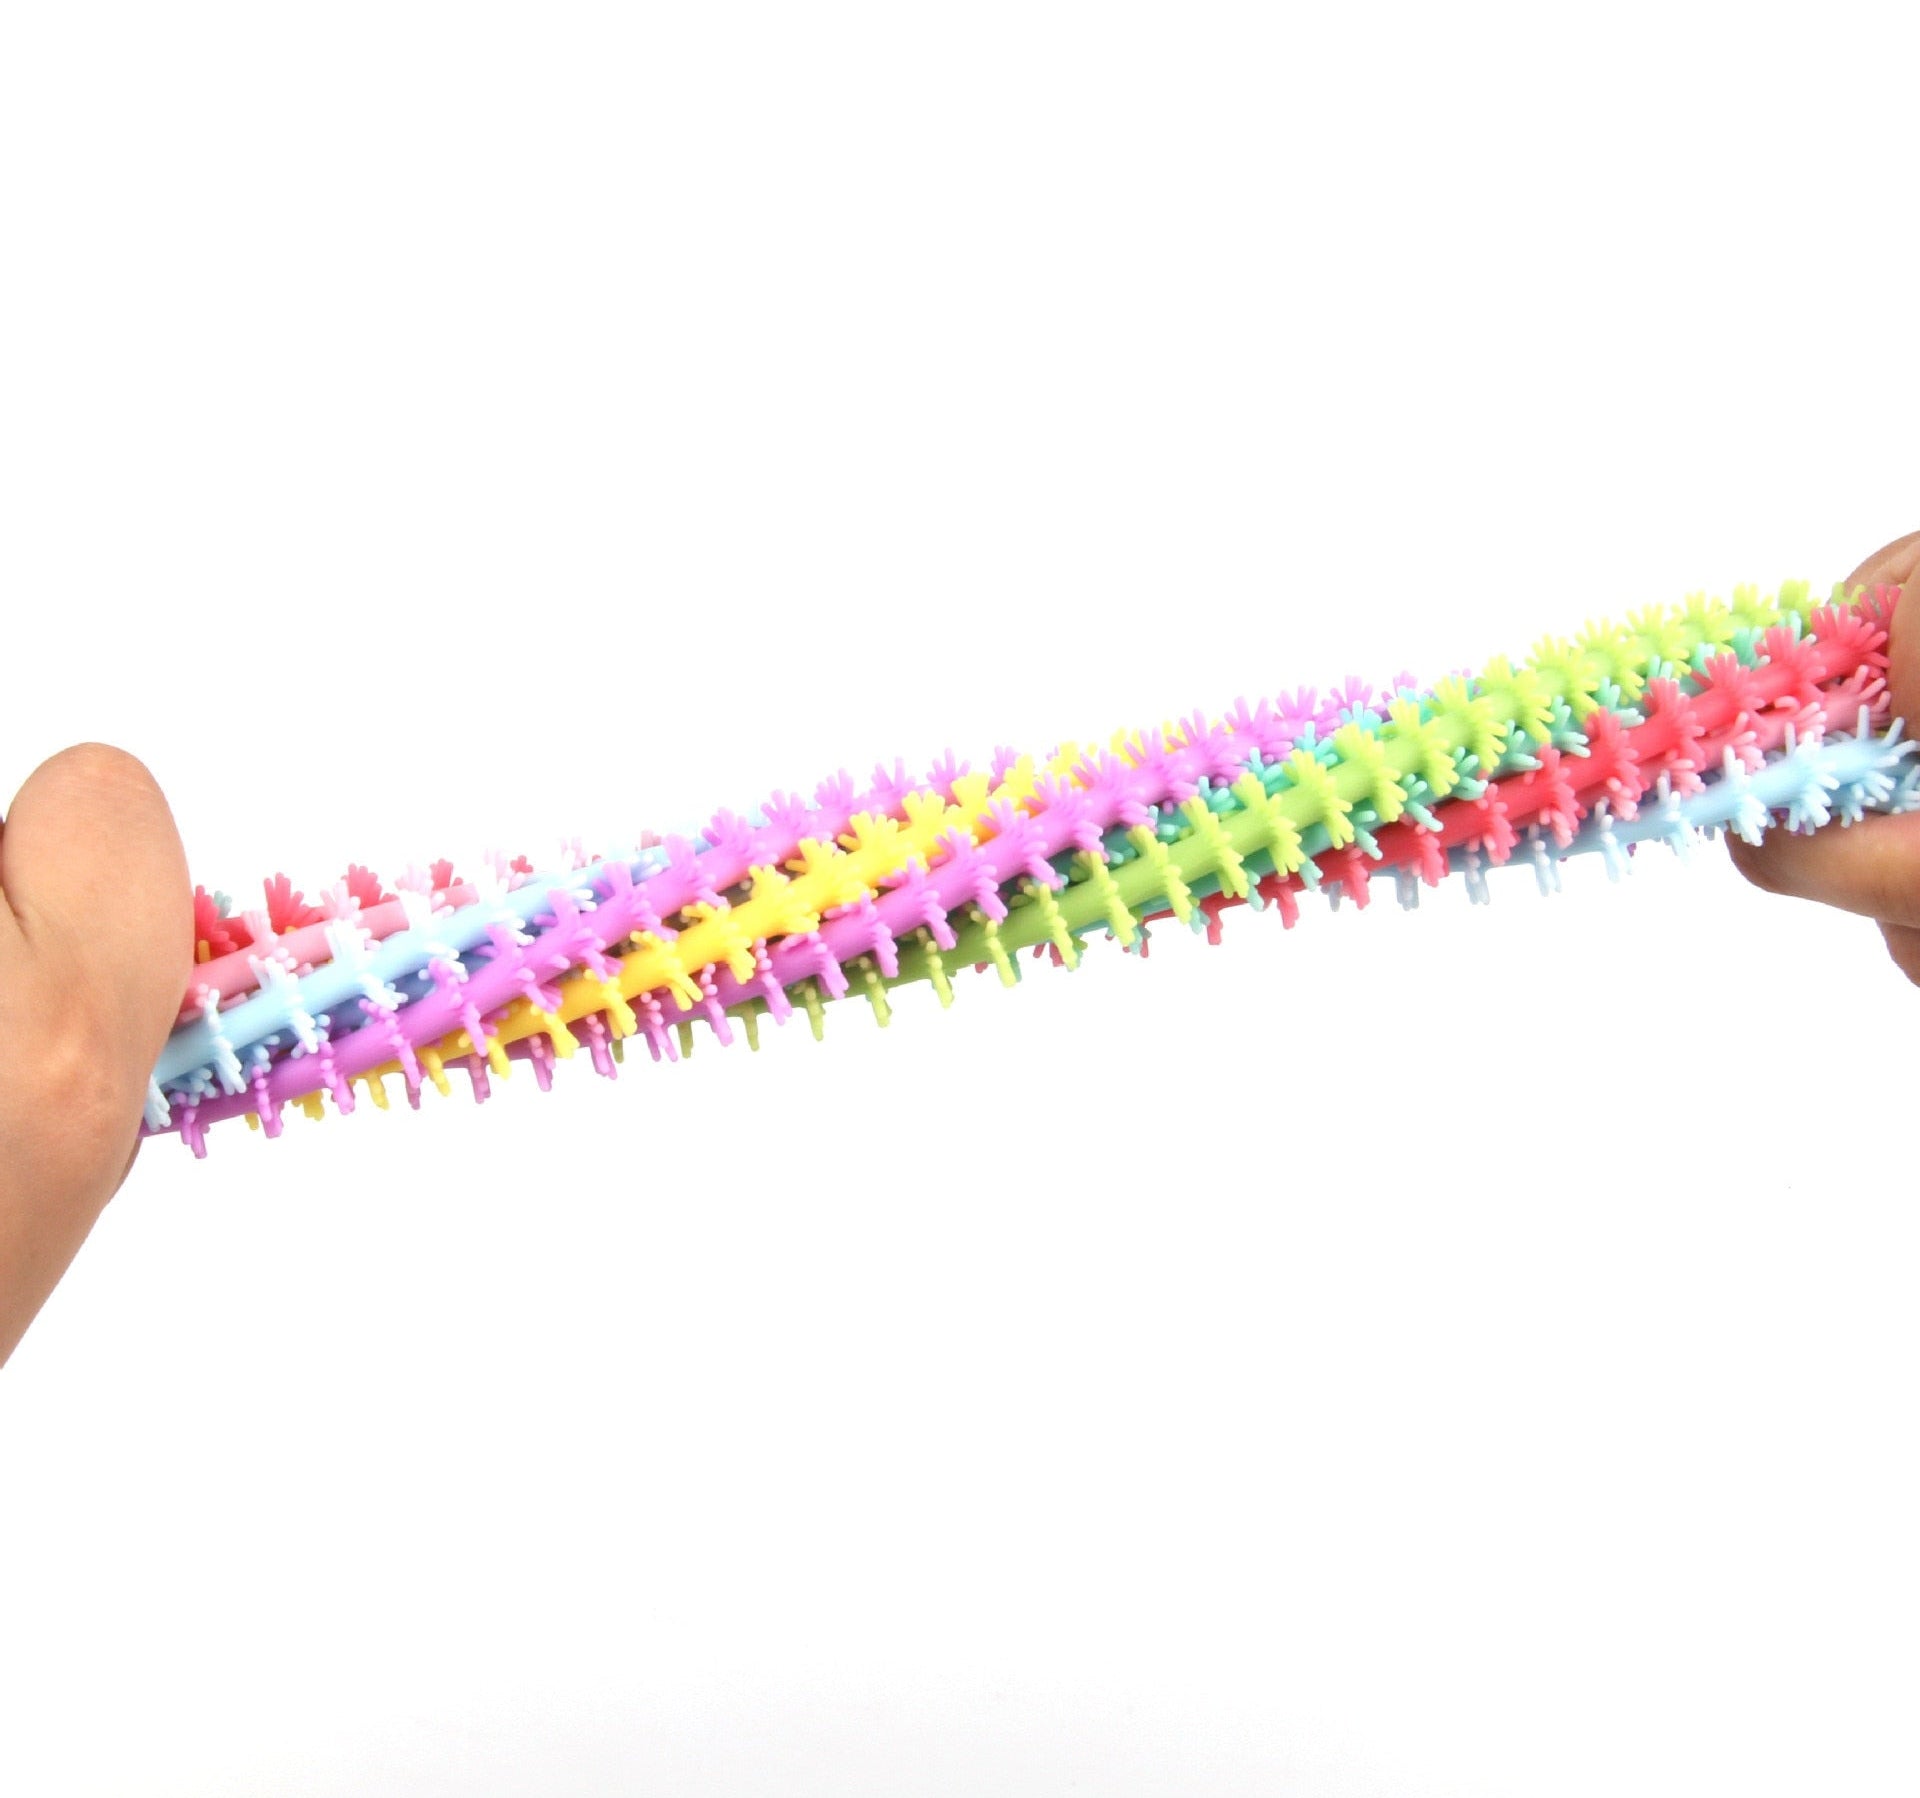 Caterpillar Fidget Stim Toys (5 pack) The Autistic Innovator 